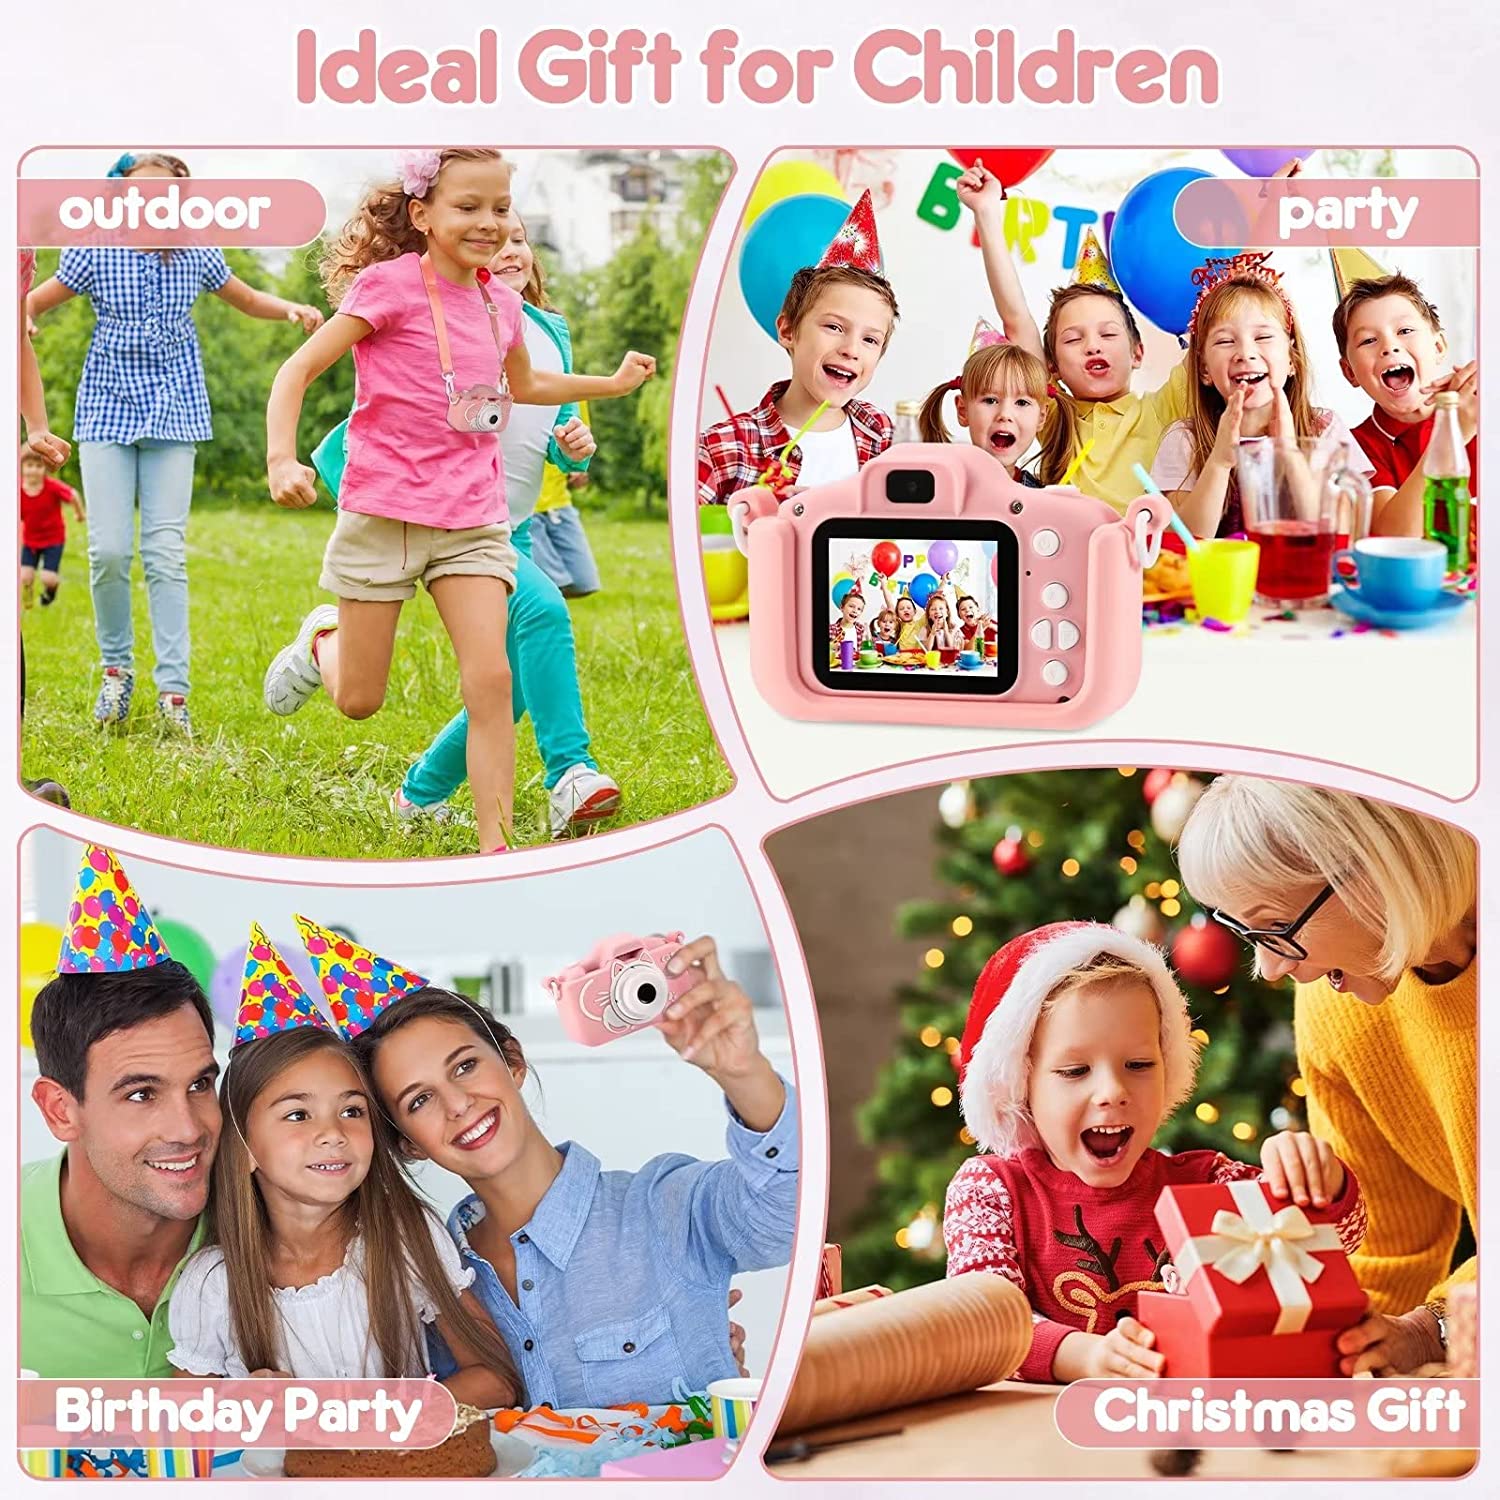 Digital-SLR-Cameras-DSLR-Digital-Cameras-1080P-HD-Children-Cameras-2-Inch-Screen-Dual-Lens-Kids-Camera-20MP-Selfie-Camera-with-32-GB-Card-Birthday-Holiday-Gifts-for-Kid-3-10Y-16